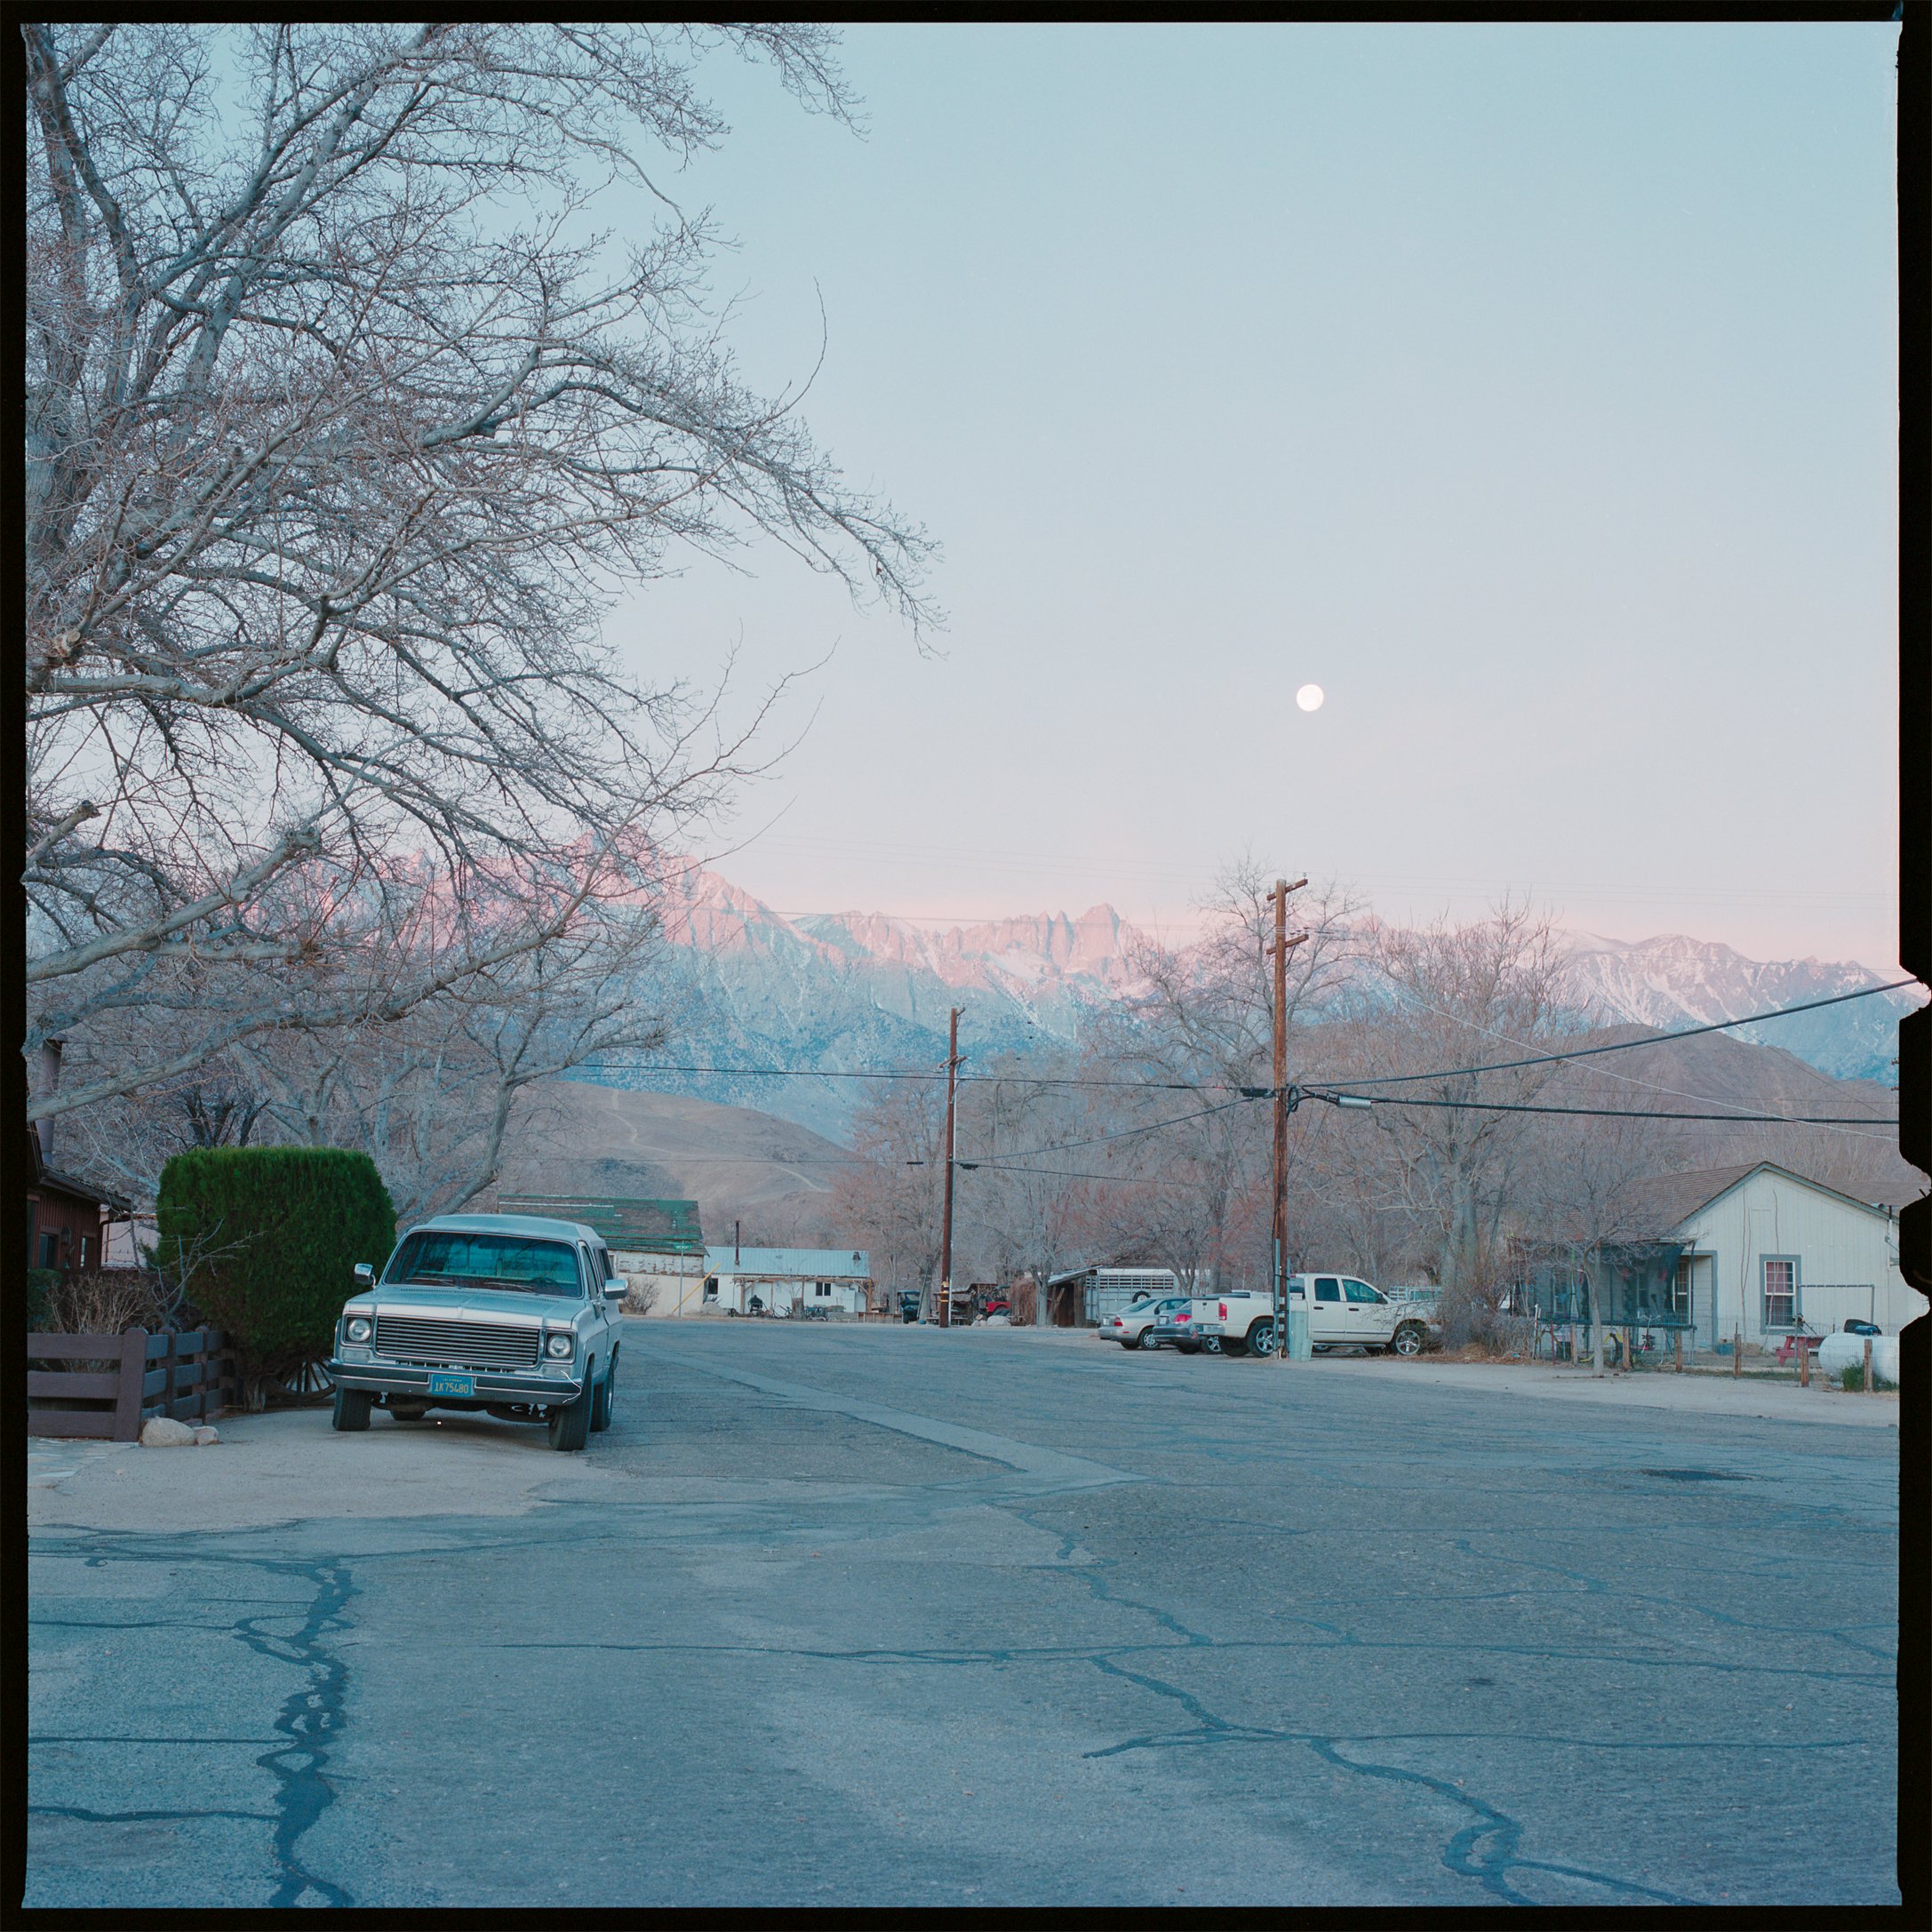   Lone Pine, California, 2021  .  Kodak Portra 160 6x6 Film  